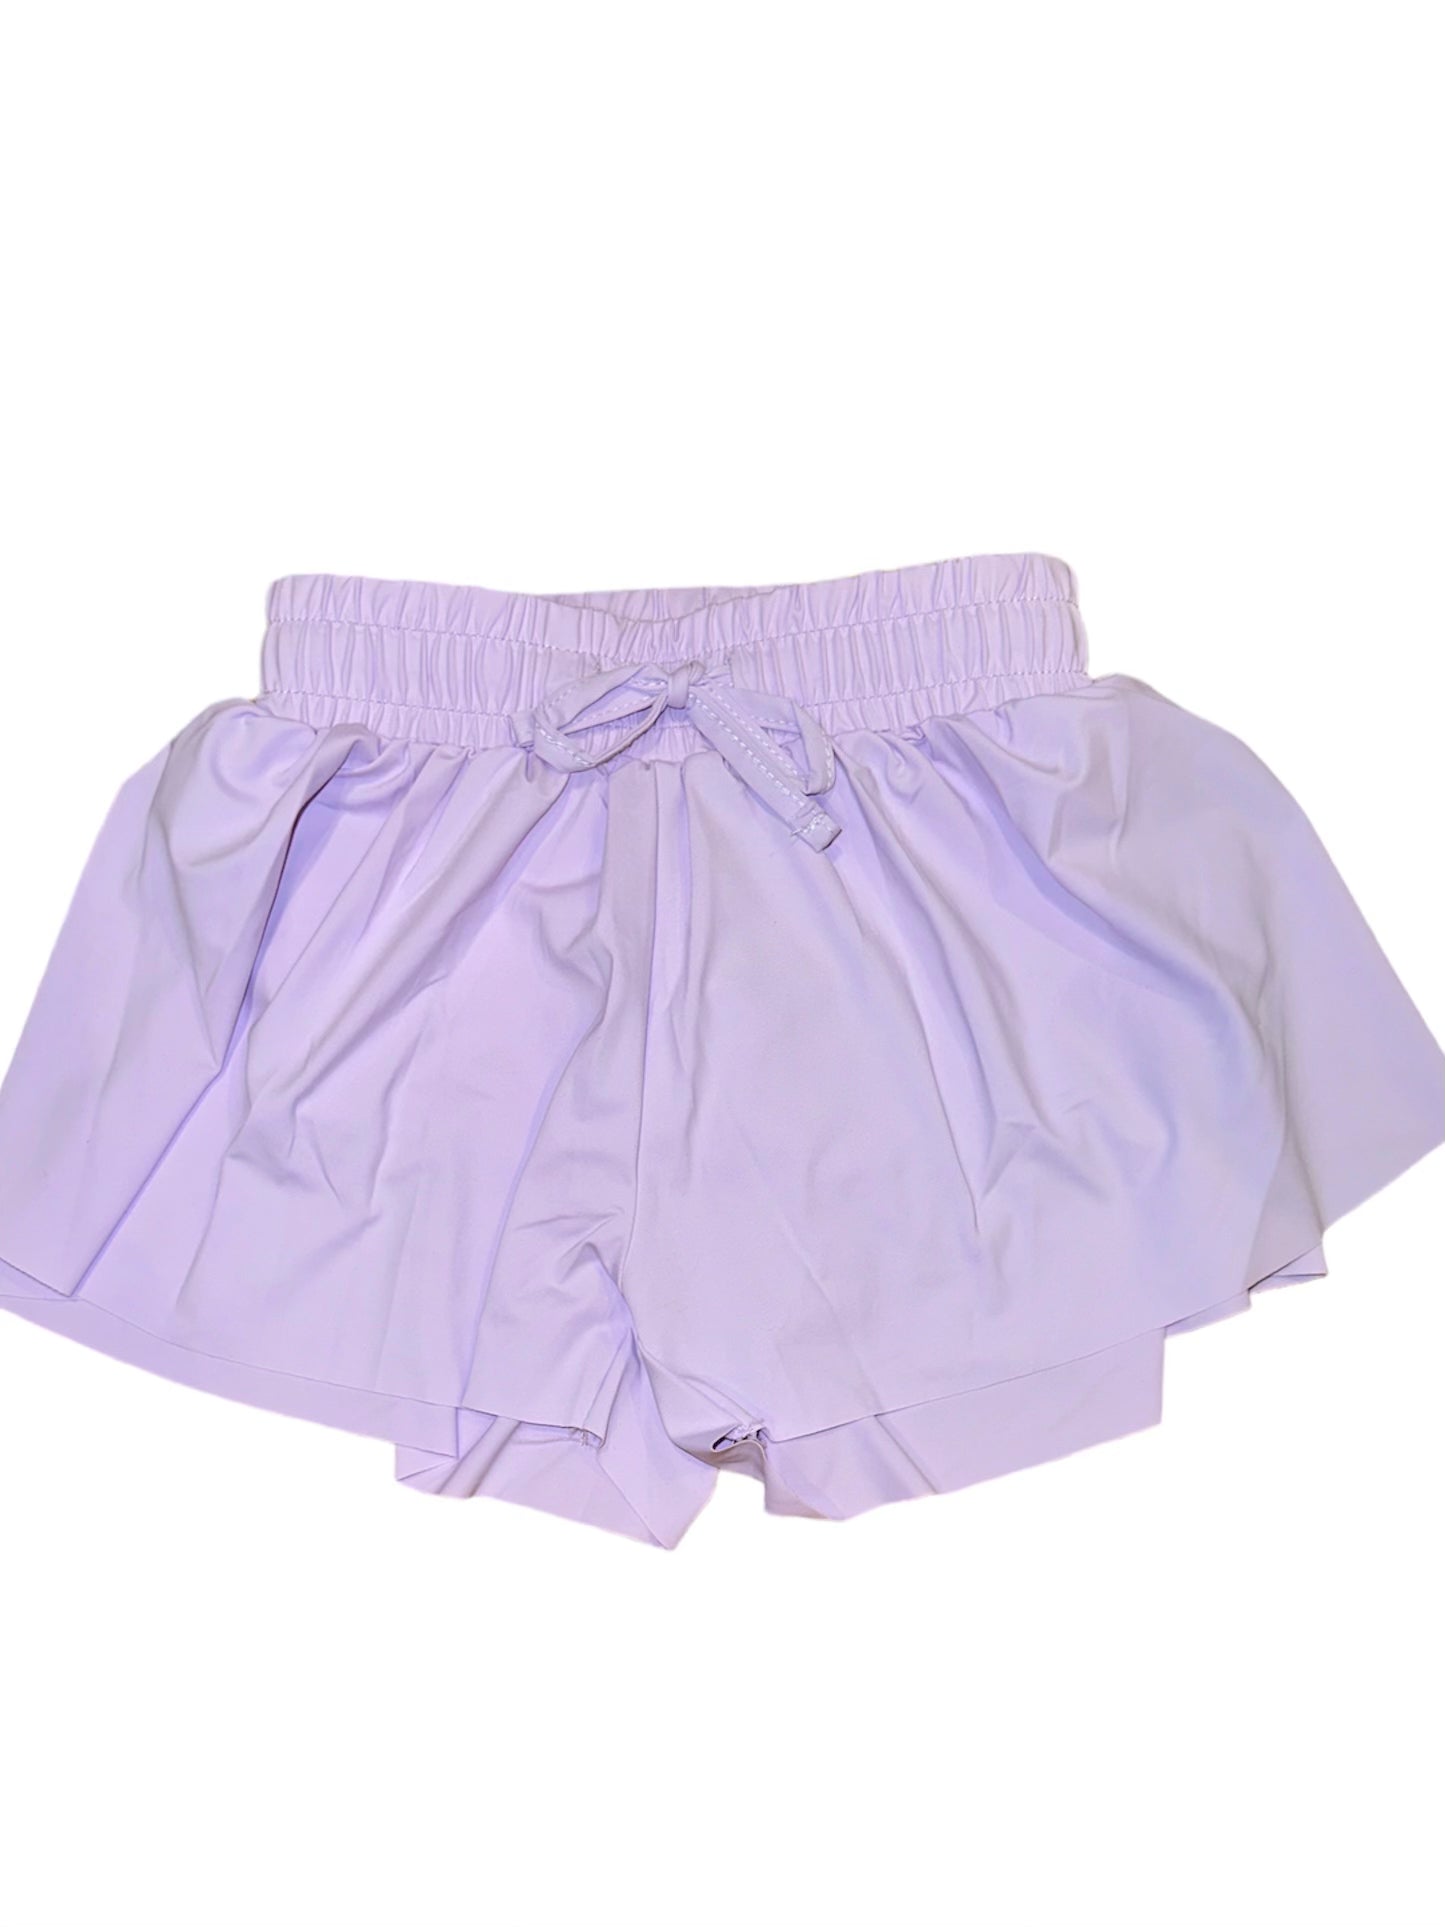 Suzette Butterfly Shorts